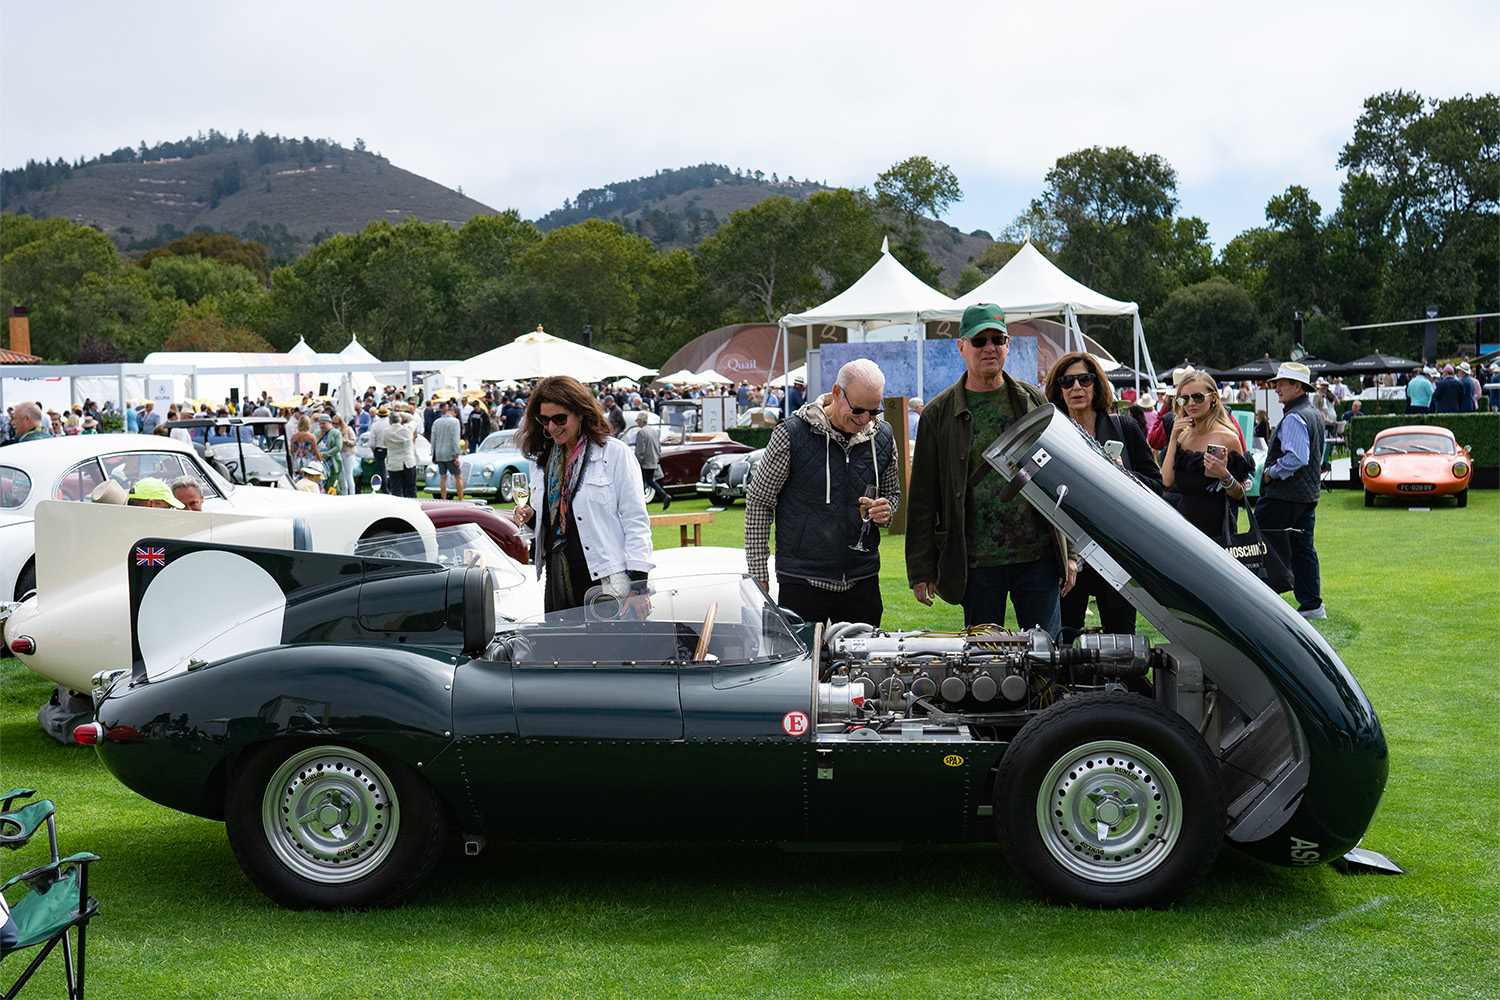 Spectators look into a vintage car at the Rolex Monterey Motorsports Reunion